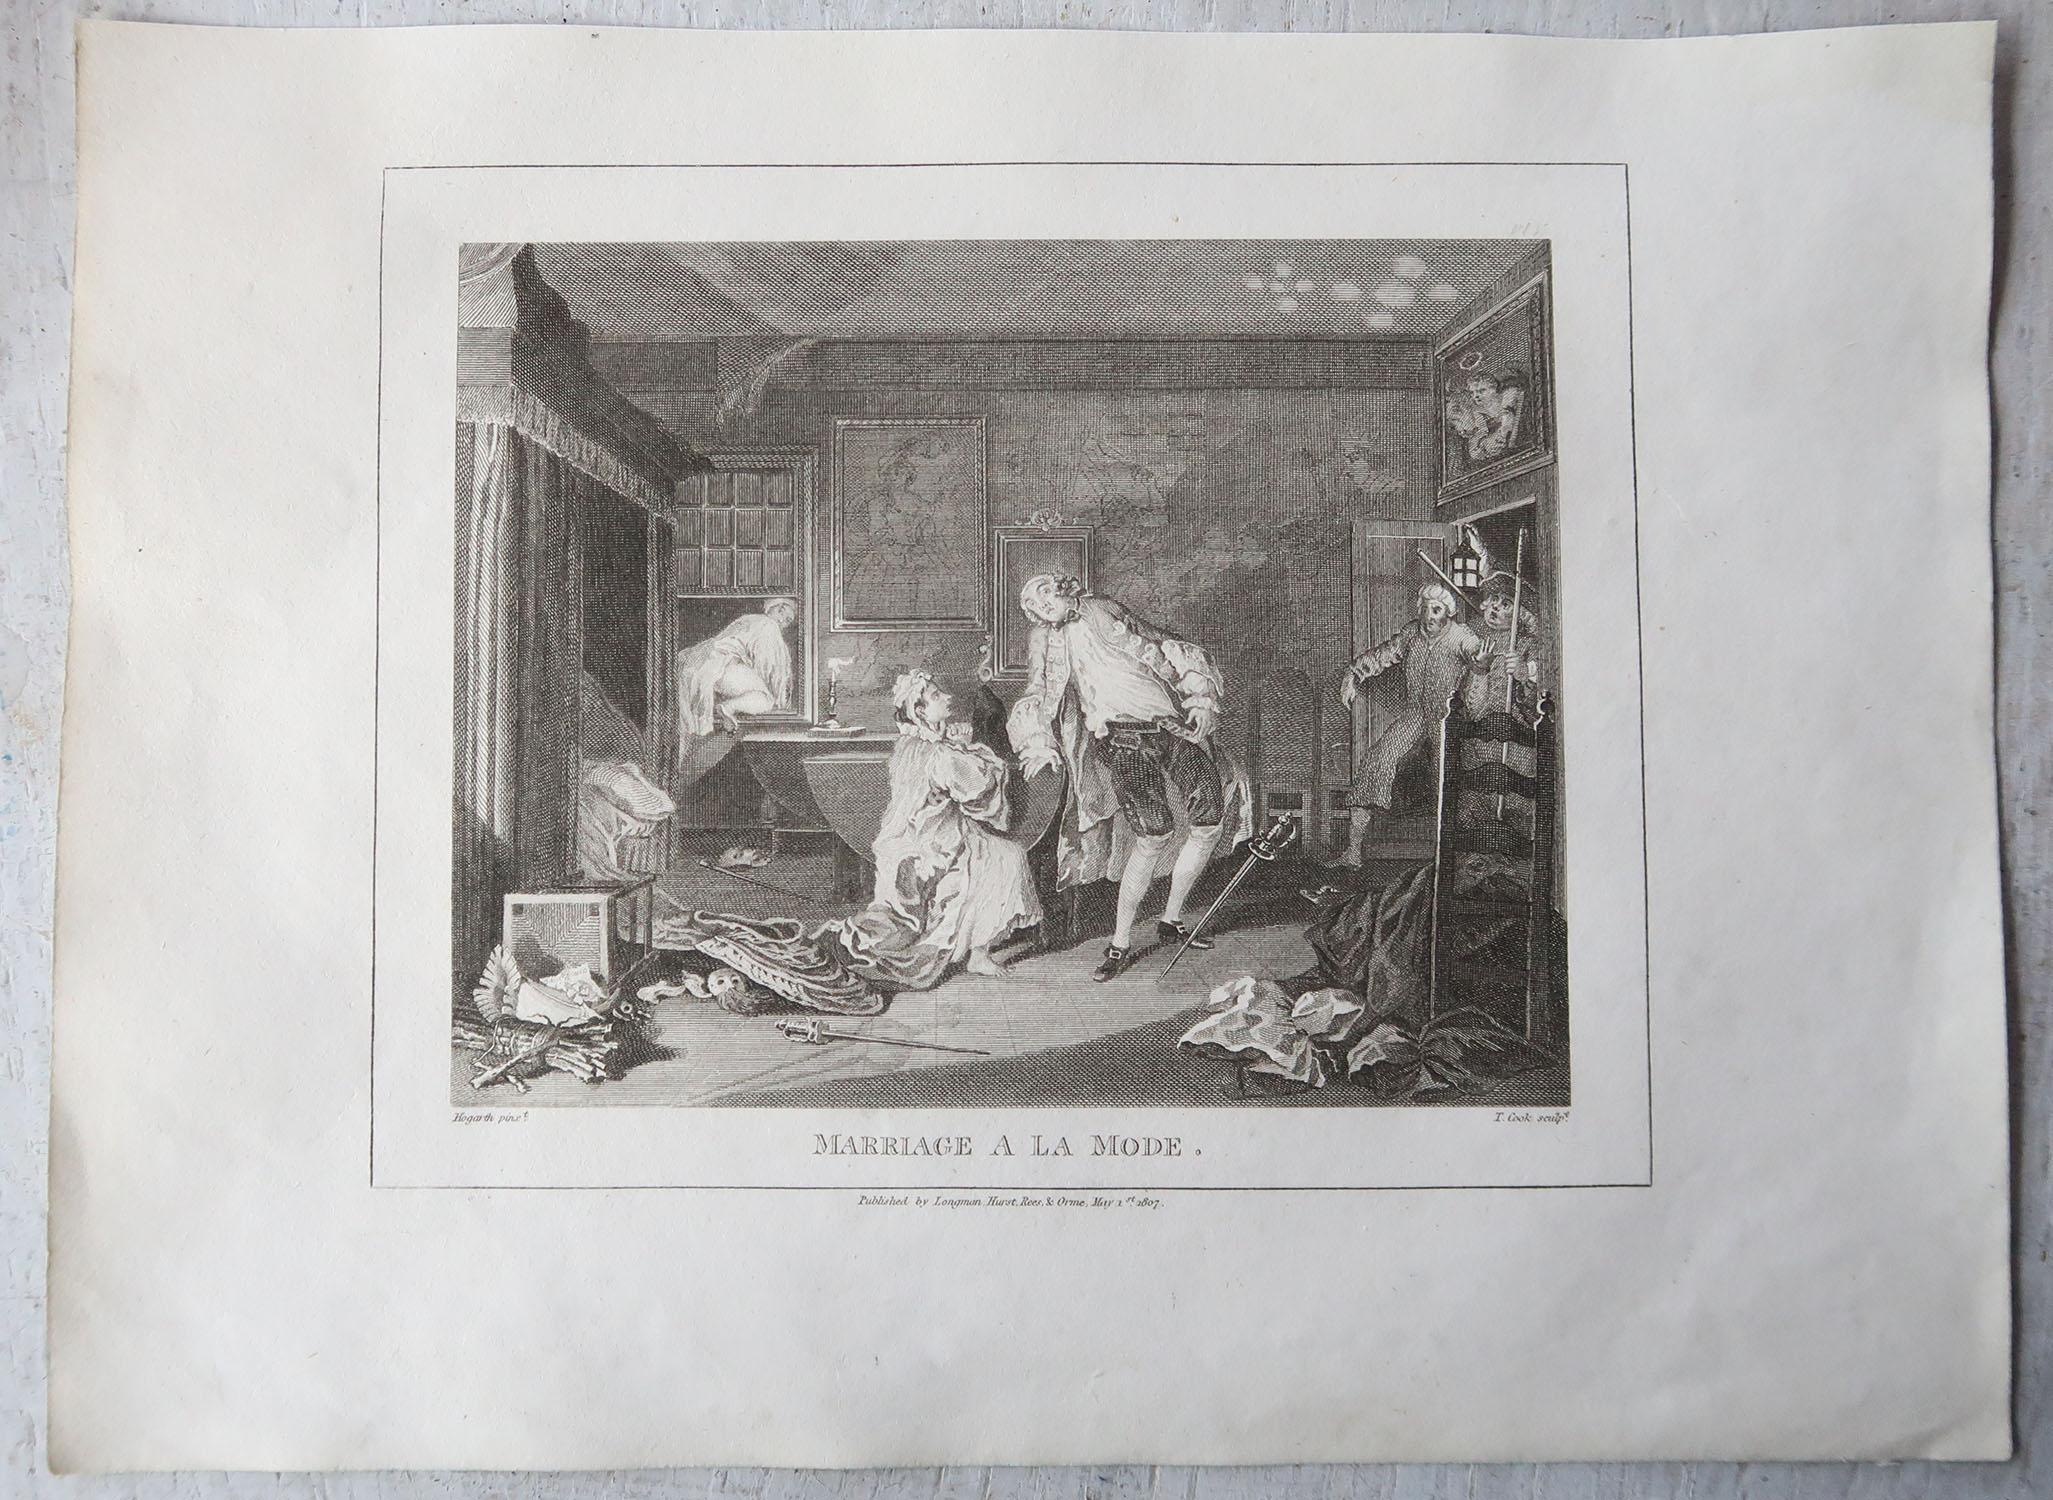 Set of 5 Original Antique Prints After William Hogarth, 